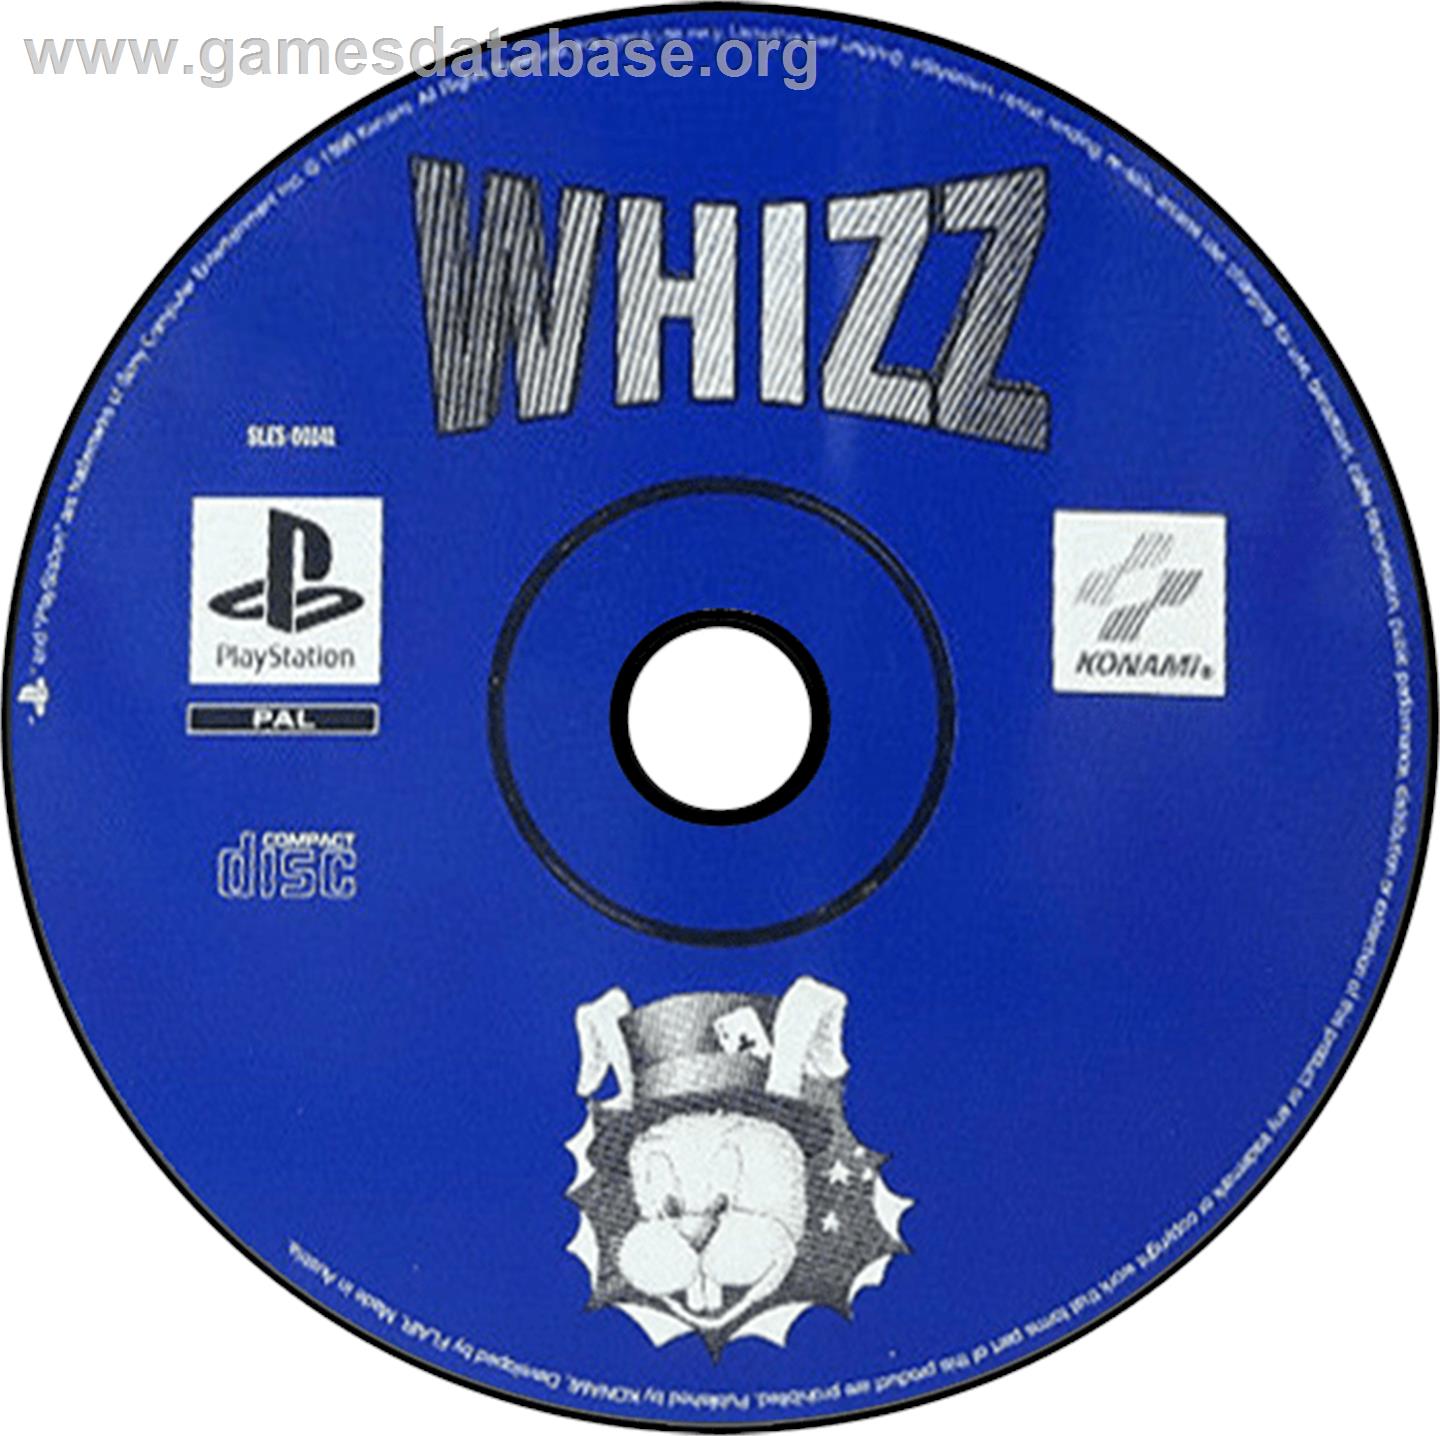 Whizz - Sony Playstation - Artwork - Disc